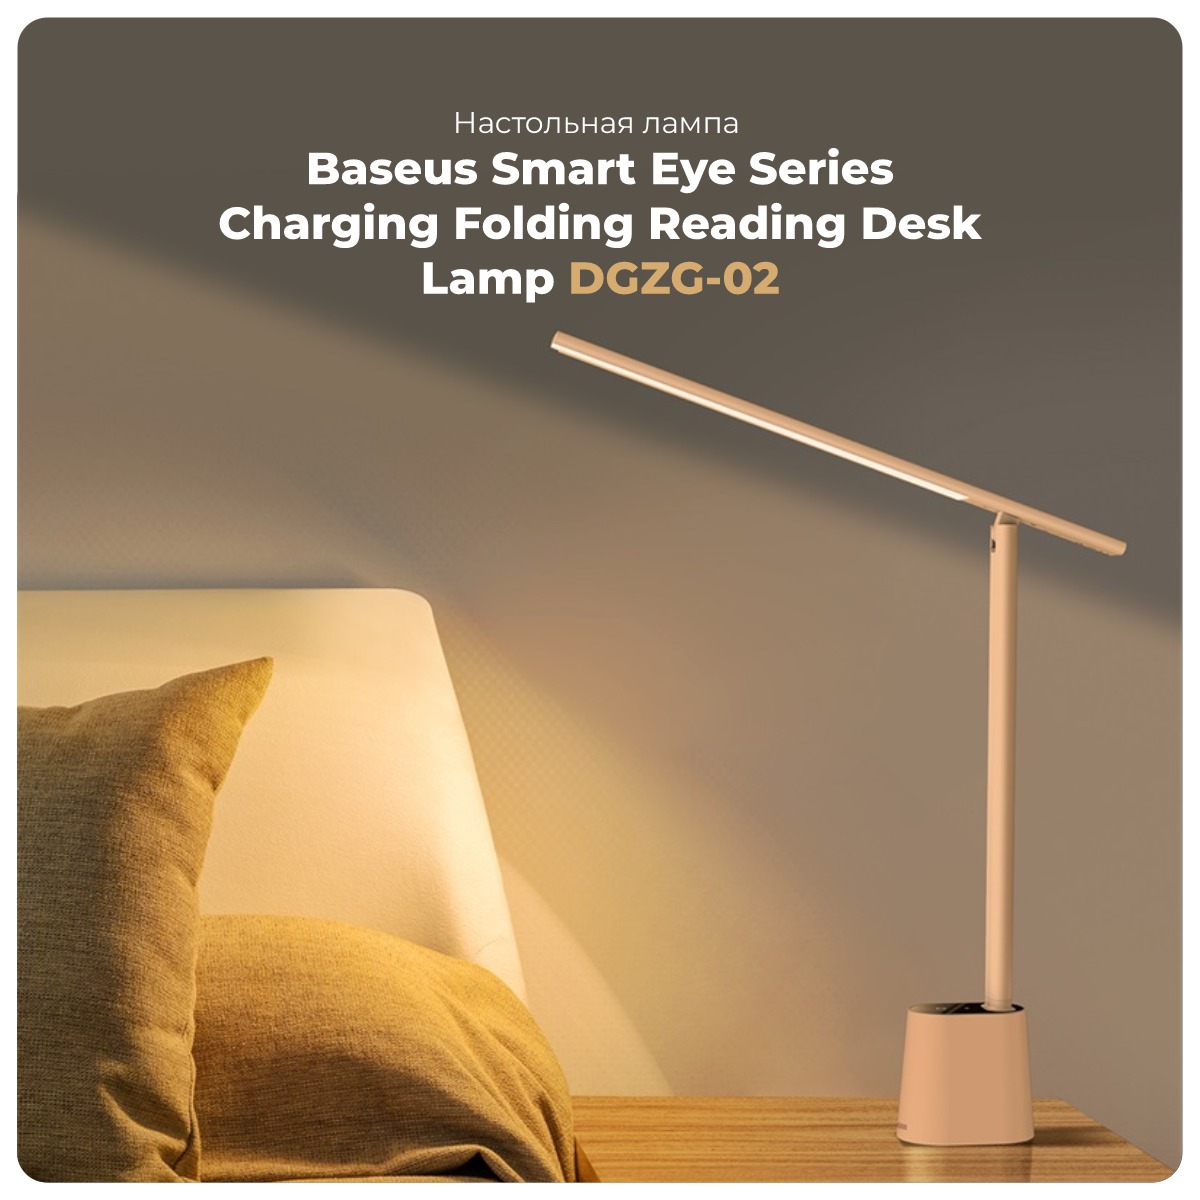 Baseus-Smart-Eye-Series-Charging-Folding-Reading-Desk-DGZG-02-01